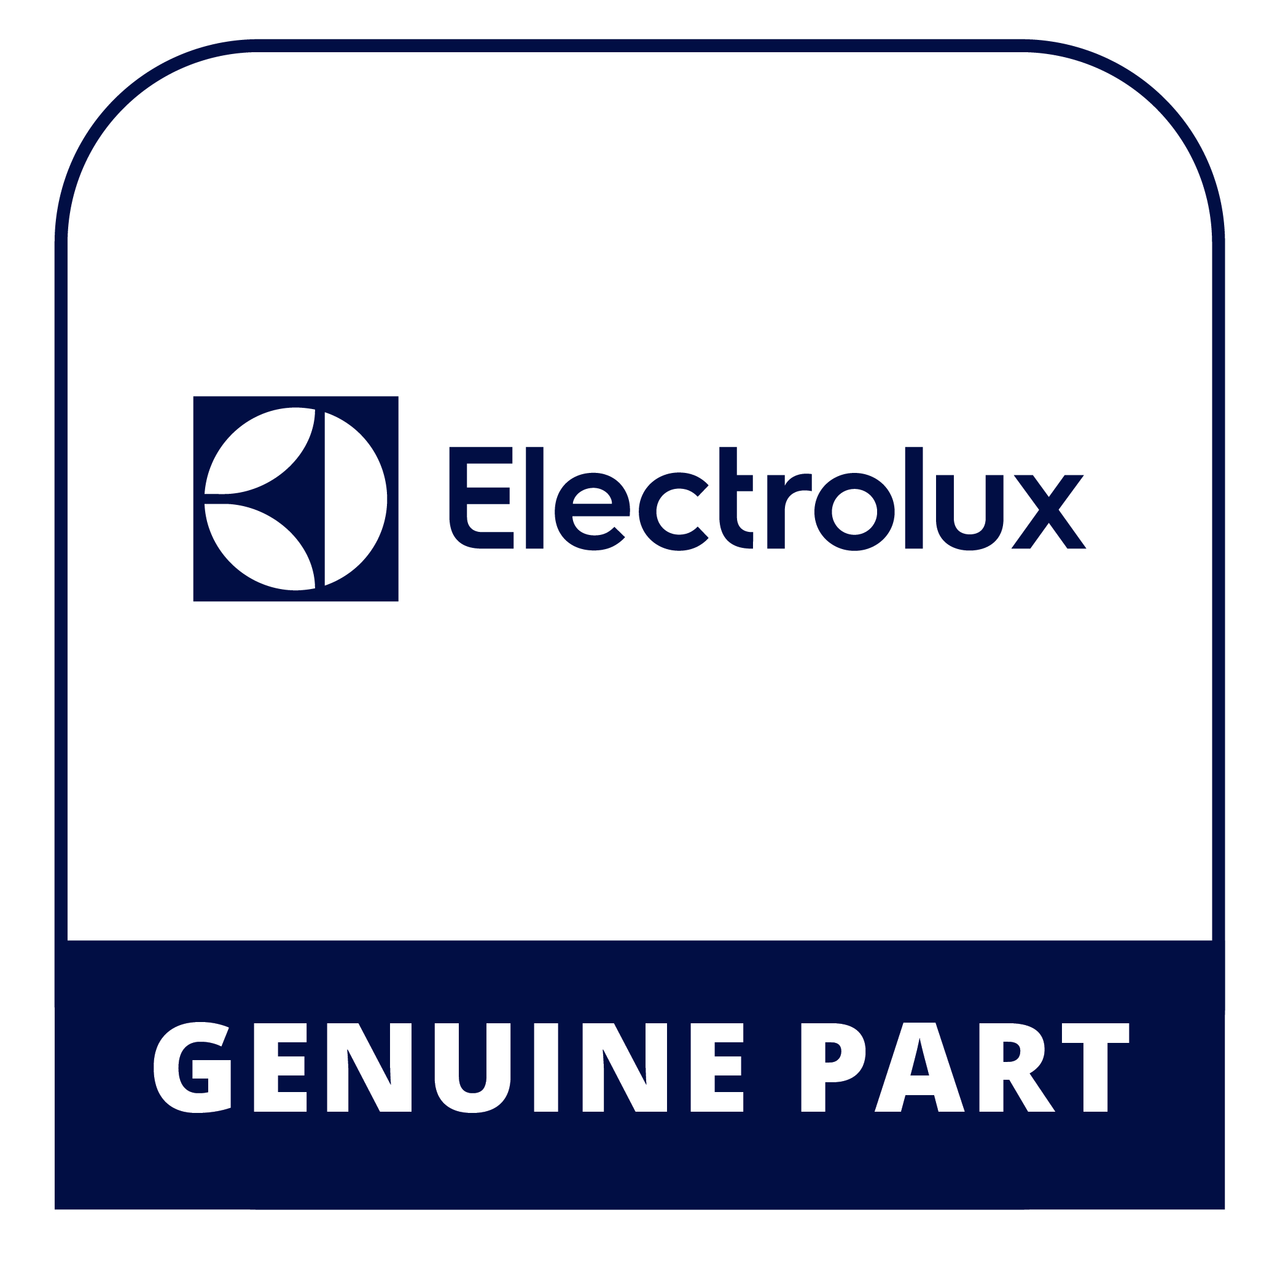 Frigidaire - Electrolux 318003605 Thermostat - Genuine Electrolux Part